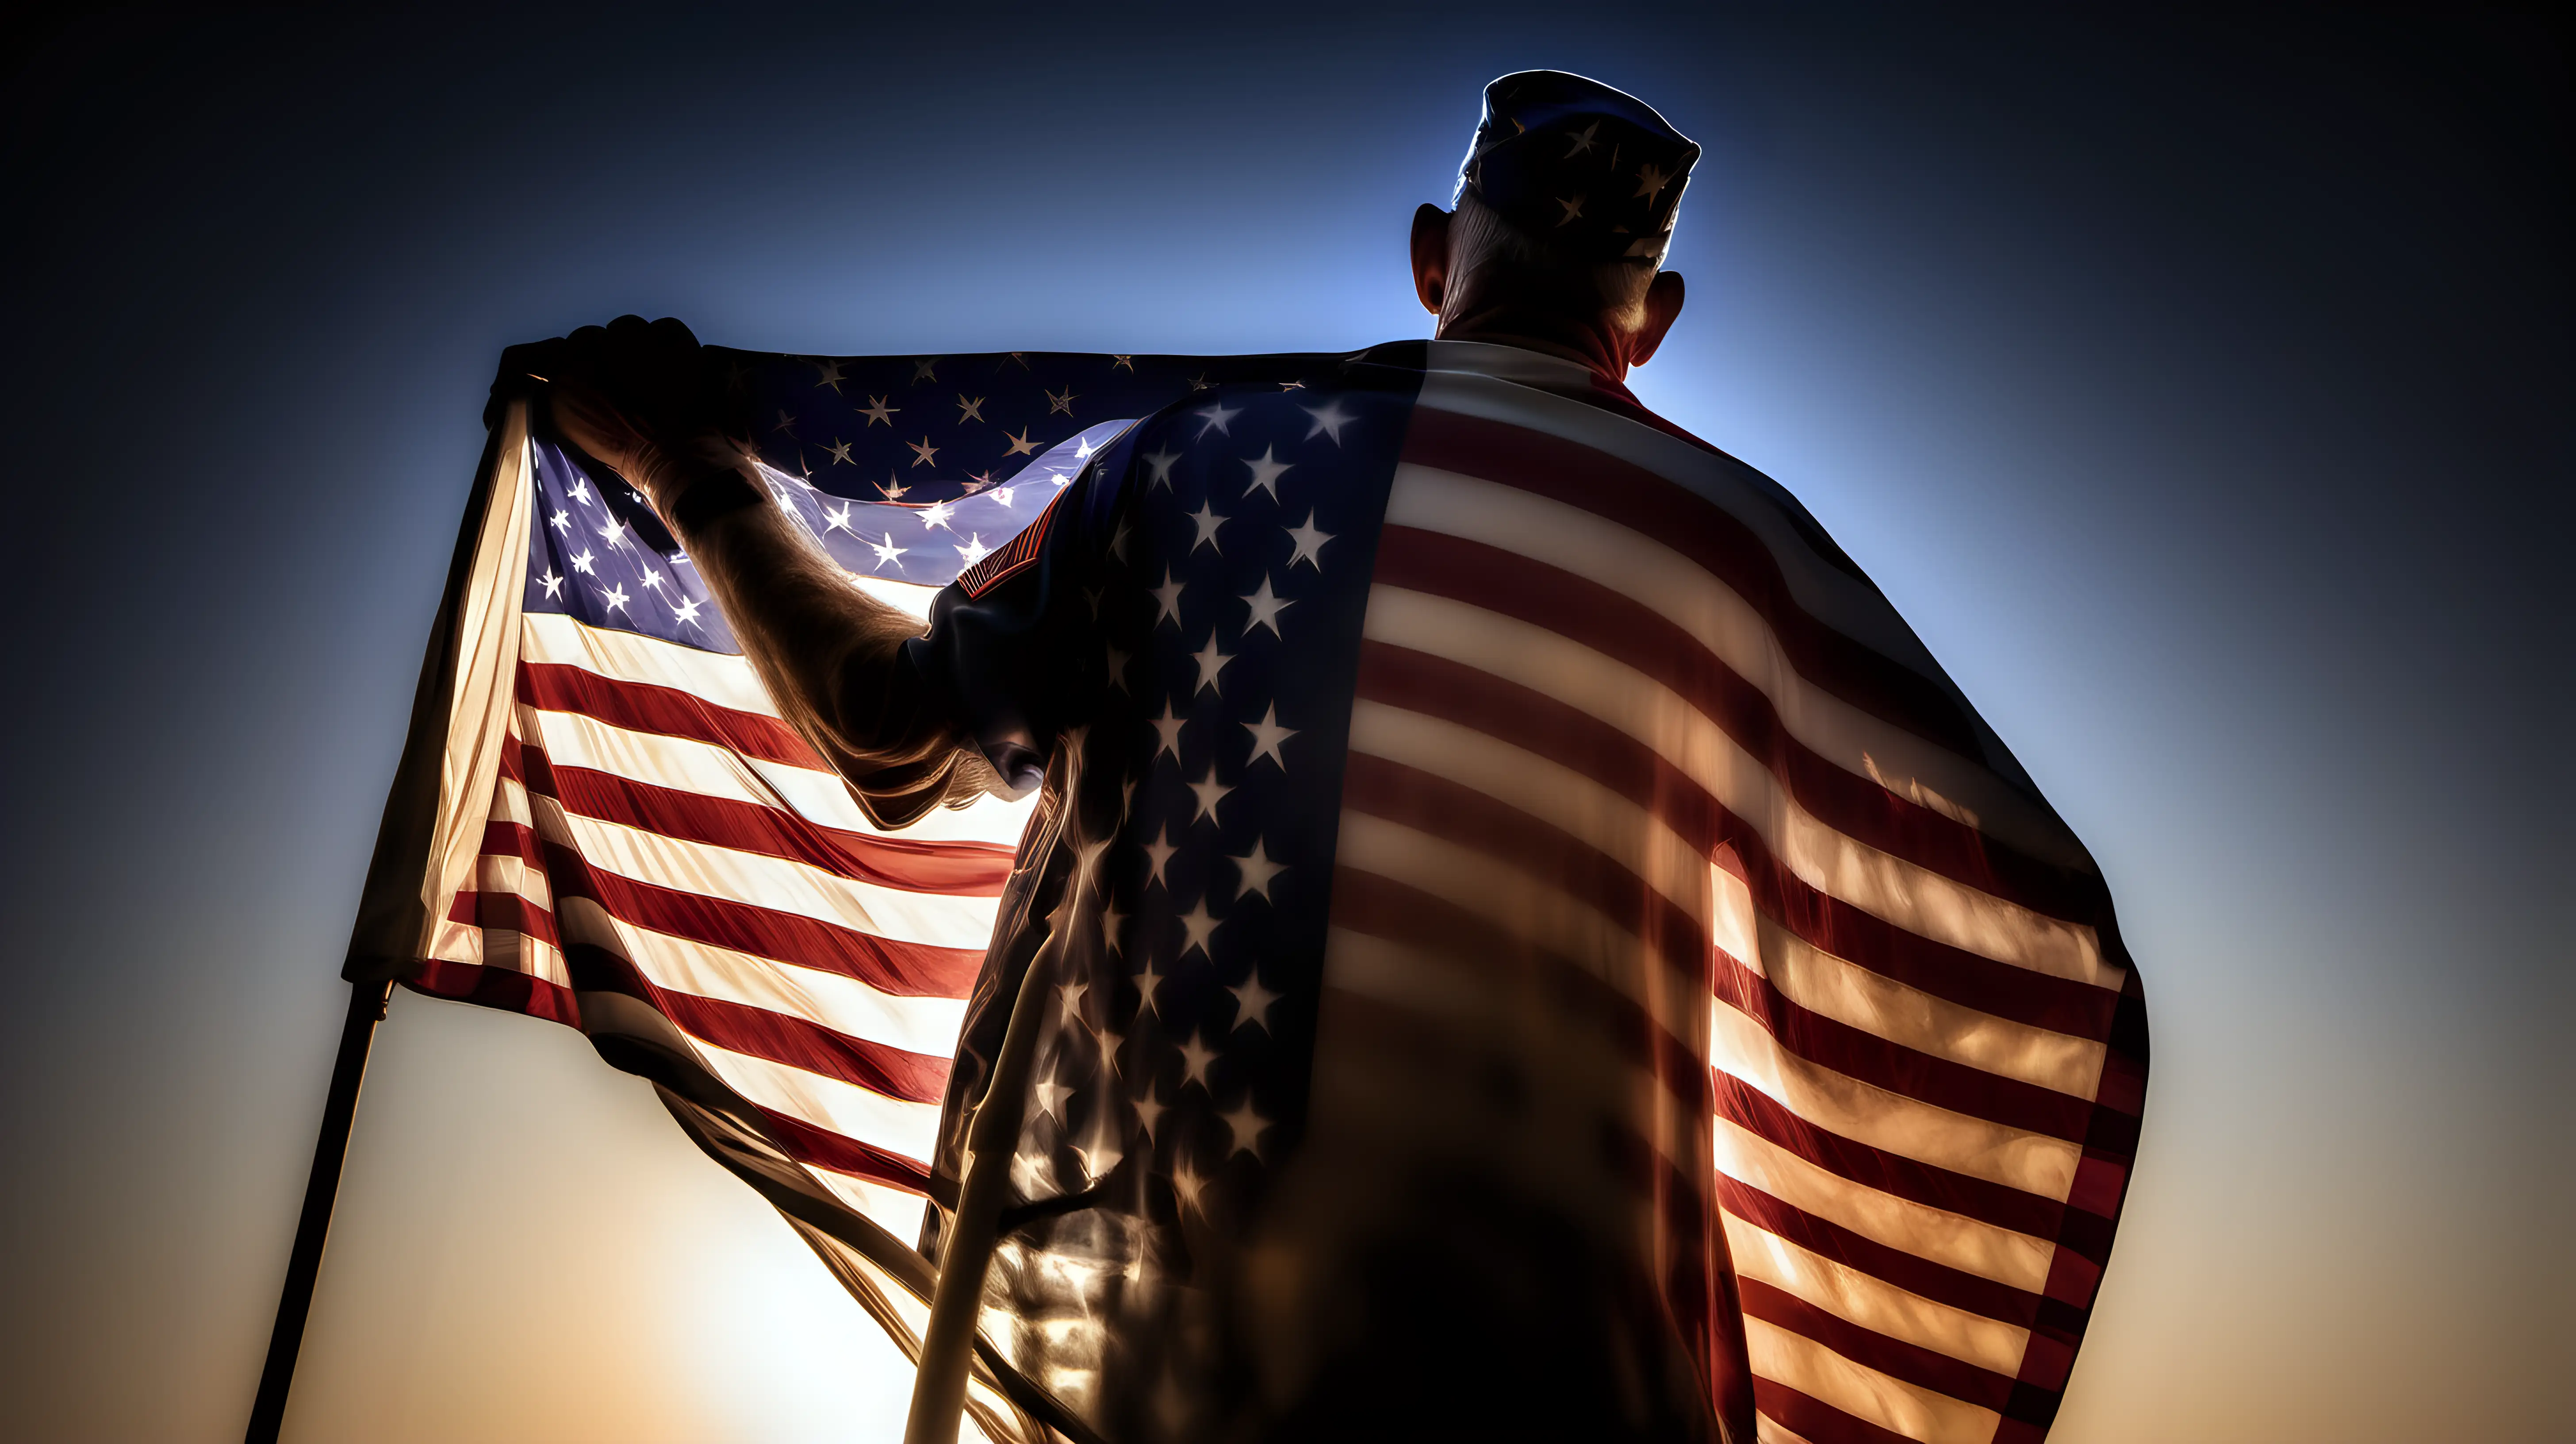 Patriotic Veteran Embracing Glowing American Flag